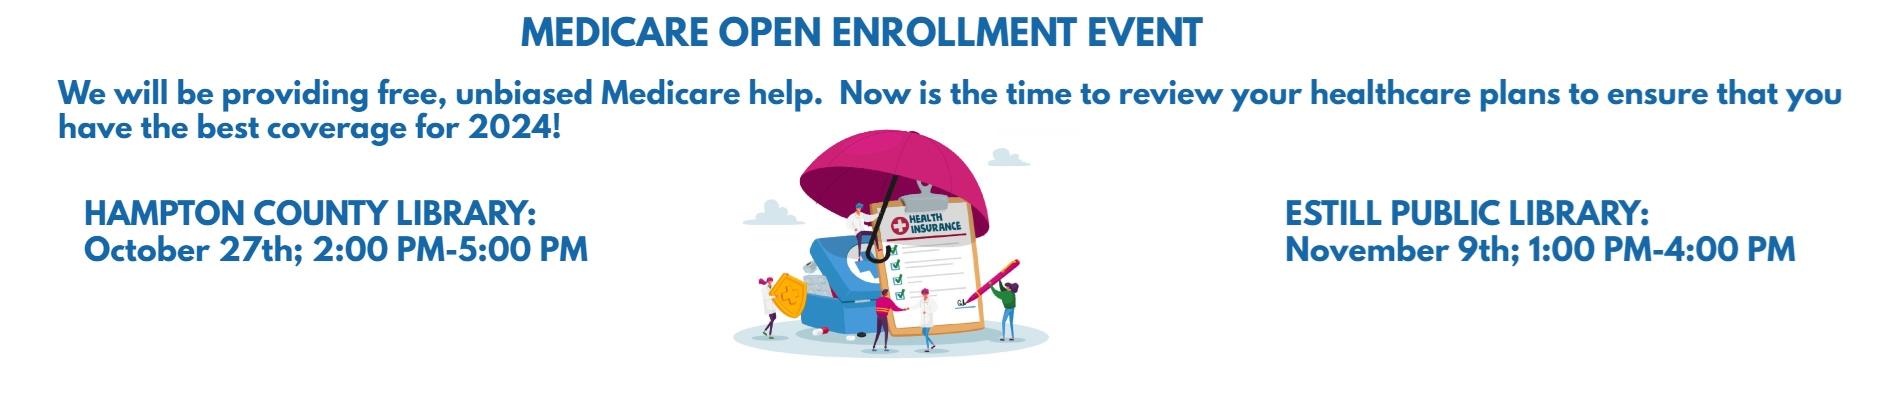 Medicare Open Enrollment Hampton Public Library October 27th 1-4PM and Estill Public Library Nov 9th 1-4 PM  Registration Information